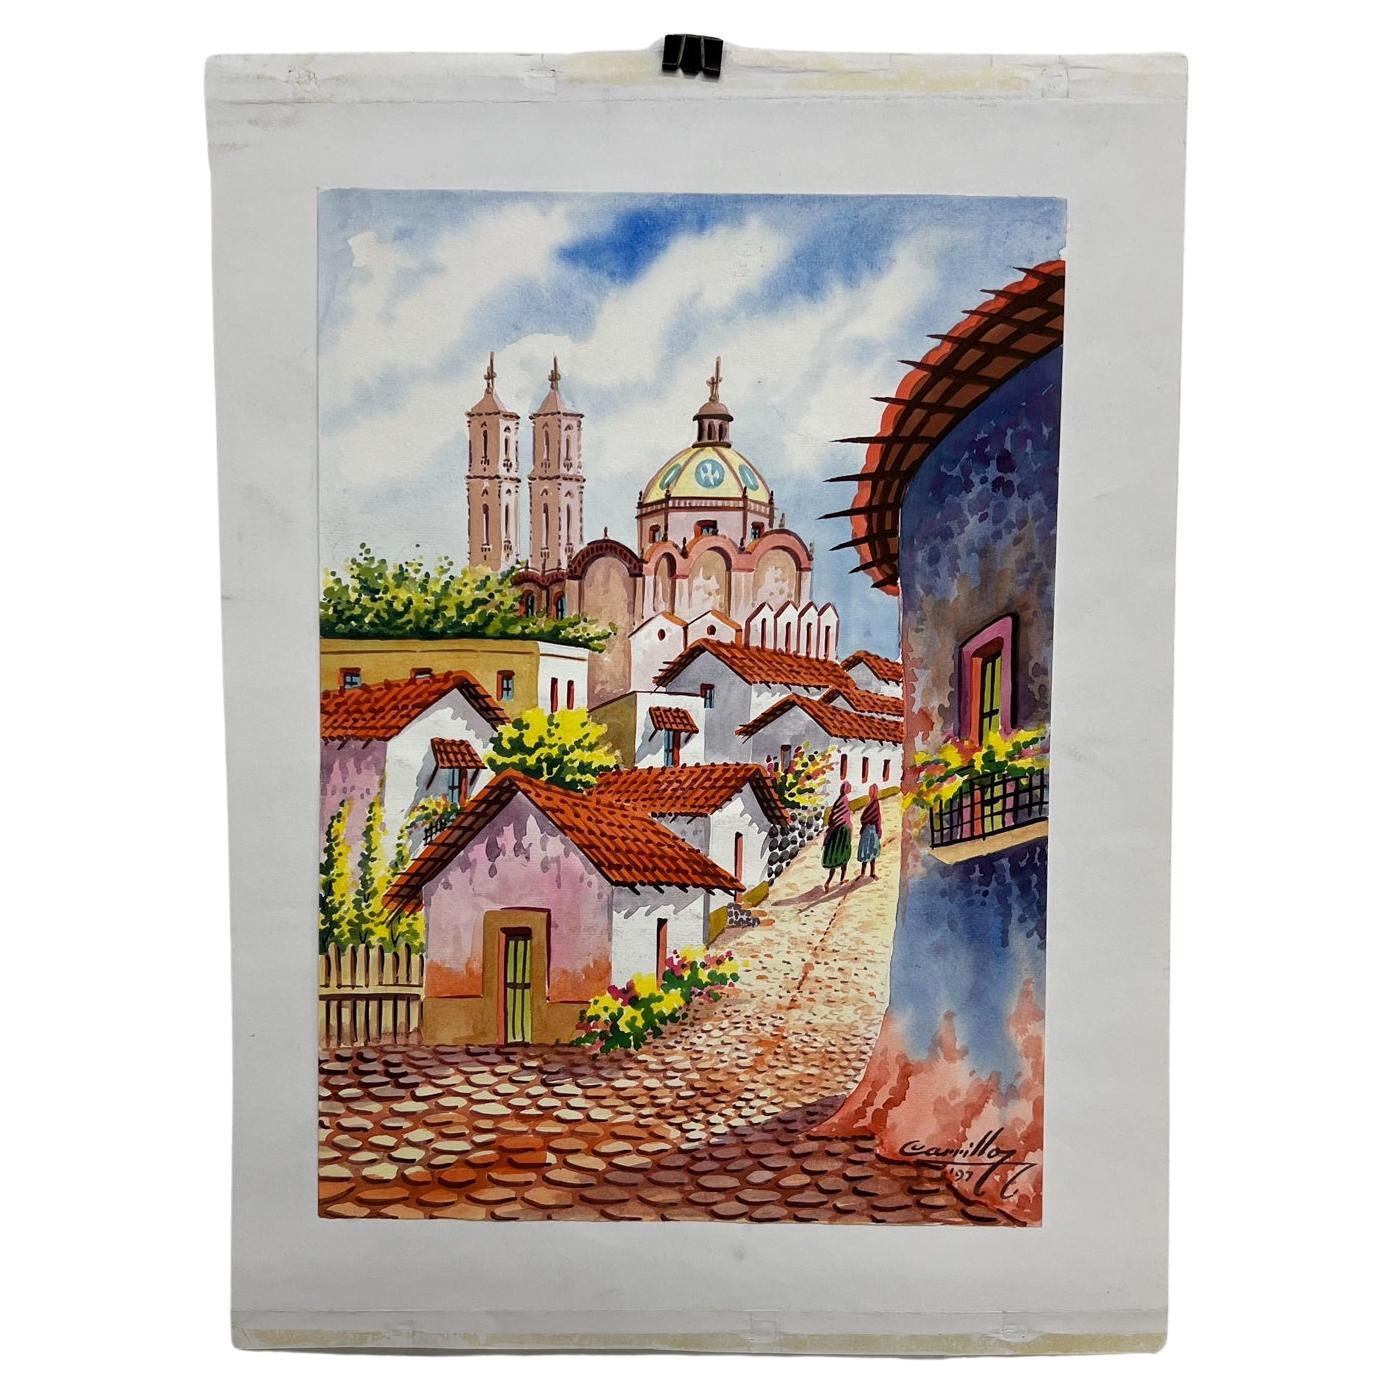 1997 Vintage Art Original Watercolor Cobblestone Village #1 by Carrillo